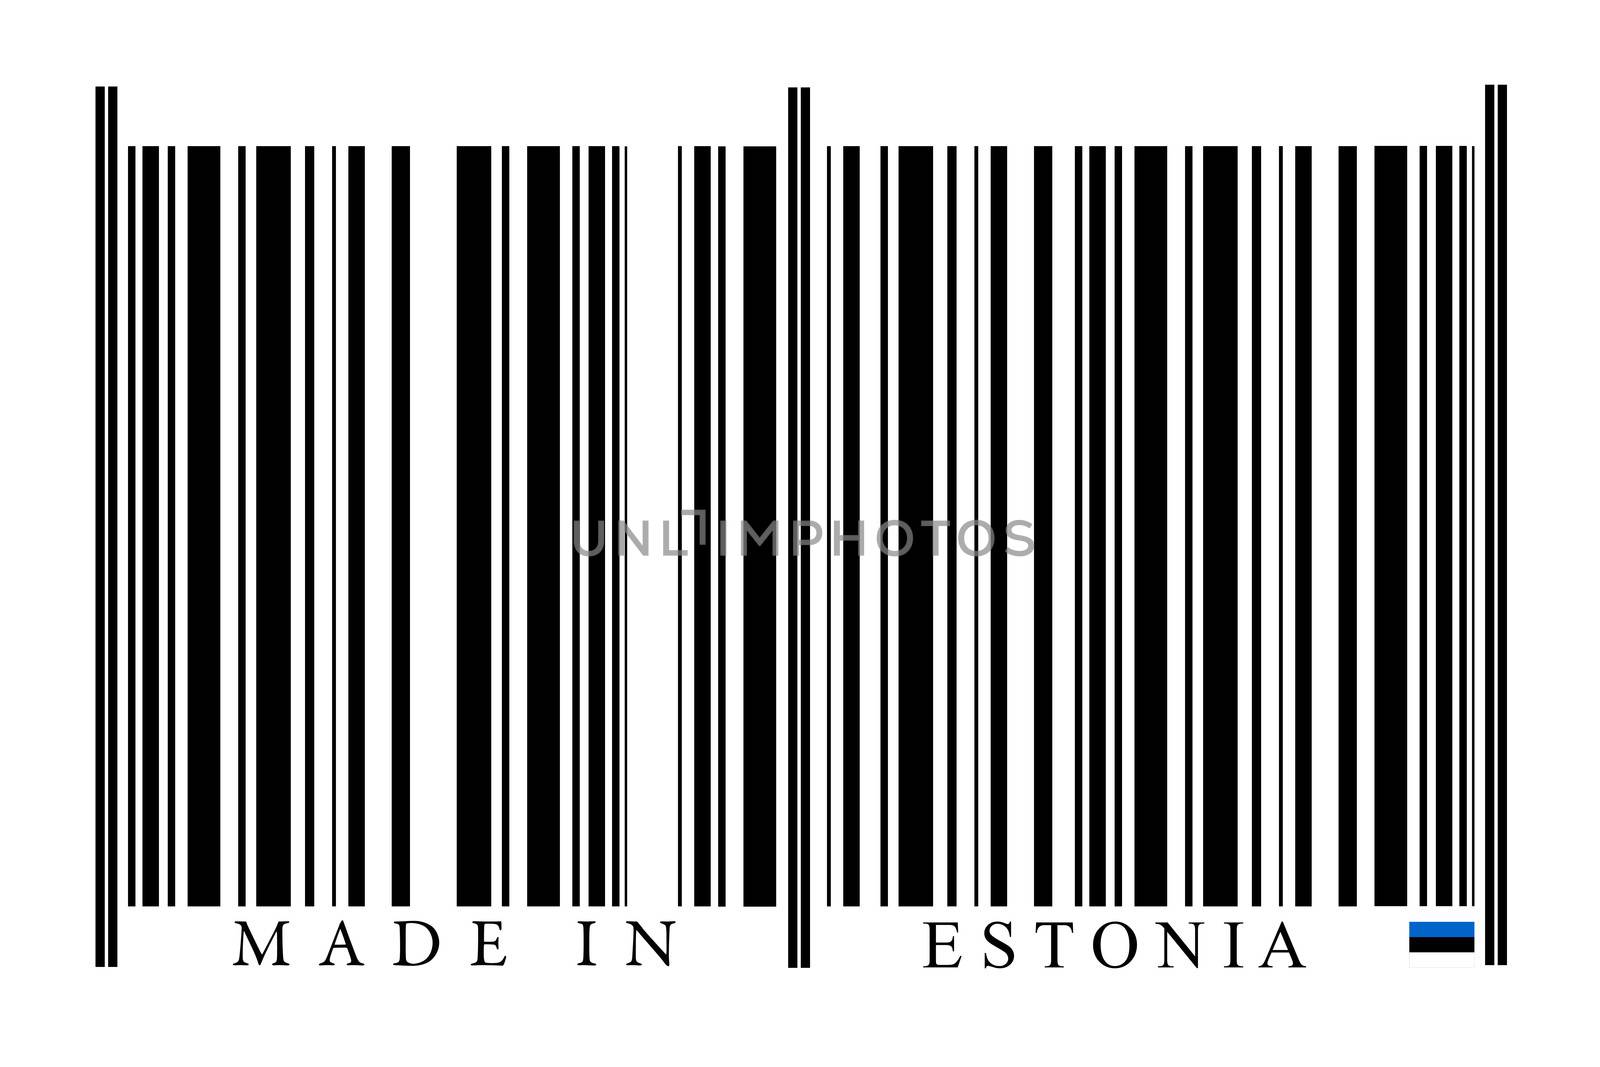 Estonia Barcode on white background